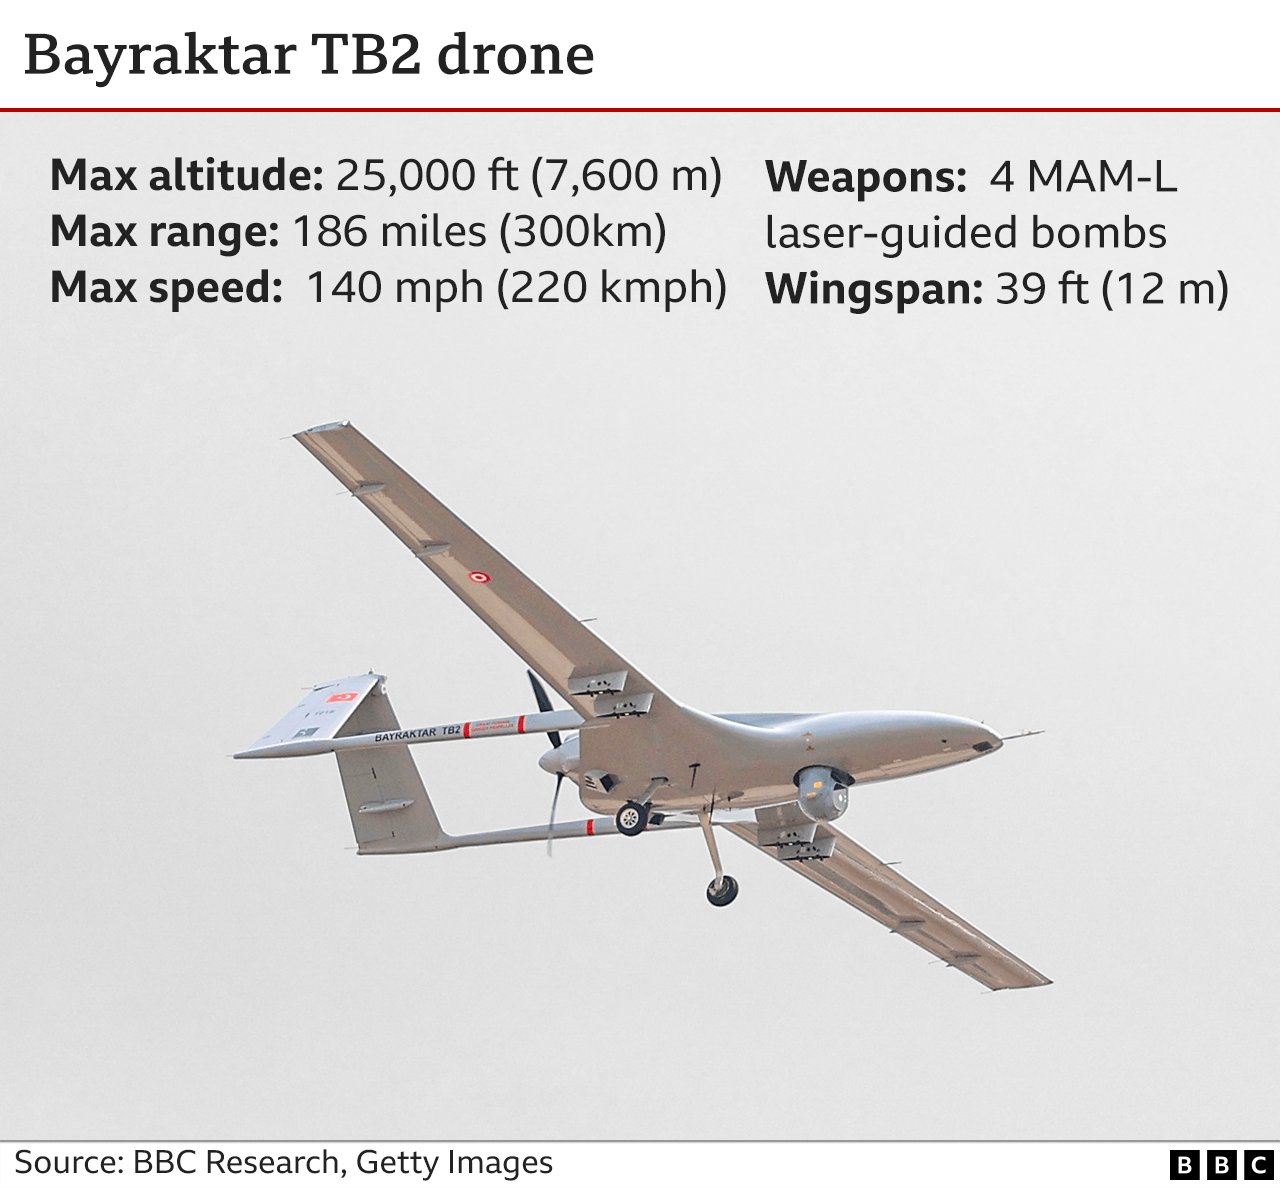 Graphic of the Bayraktar TB2 drone